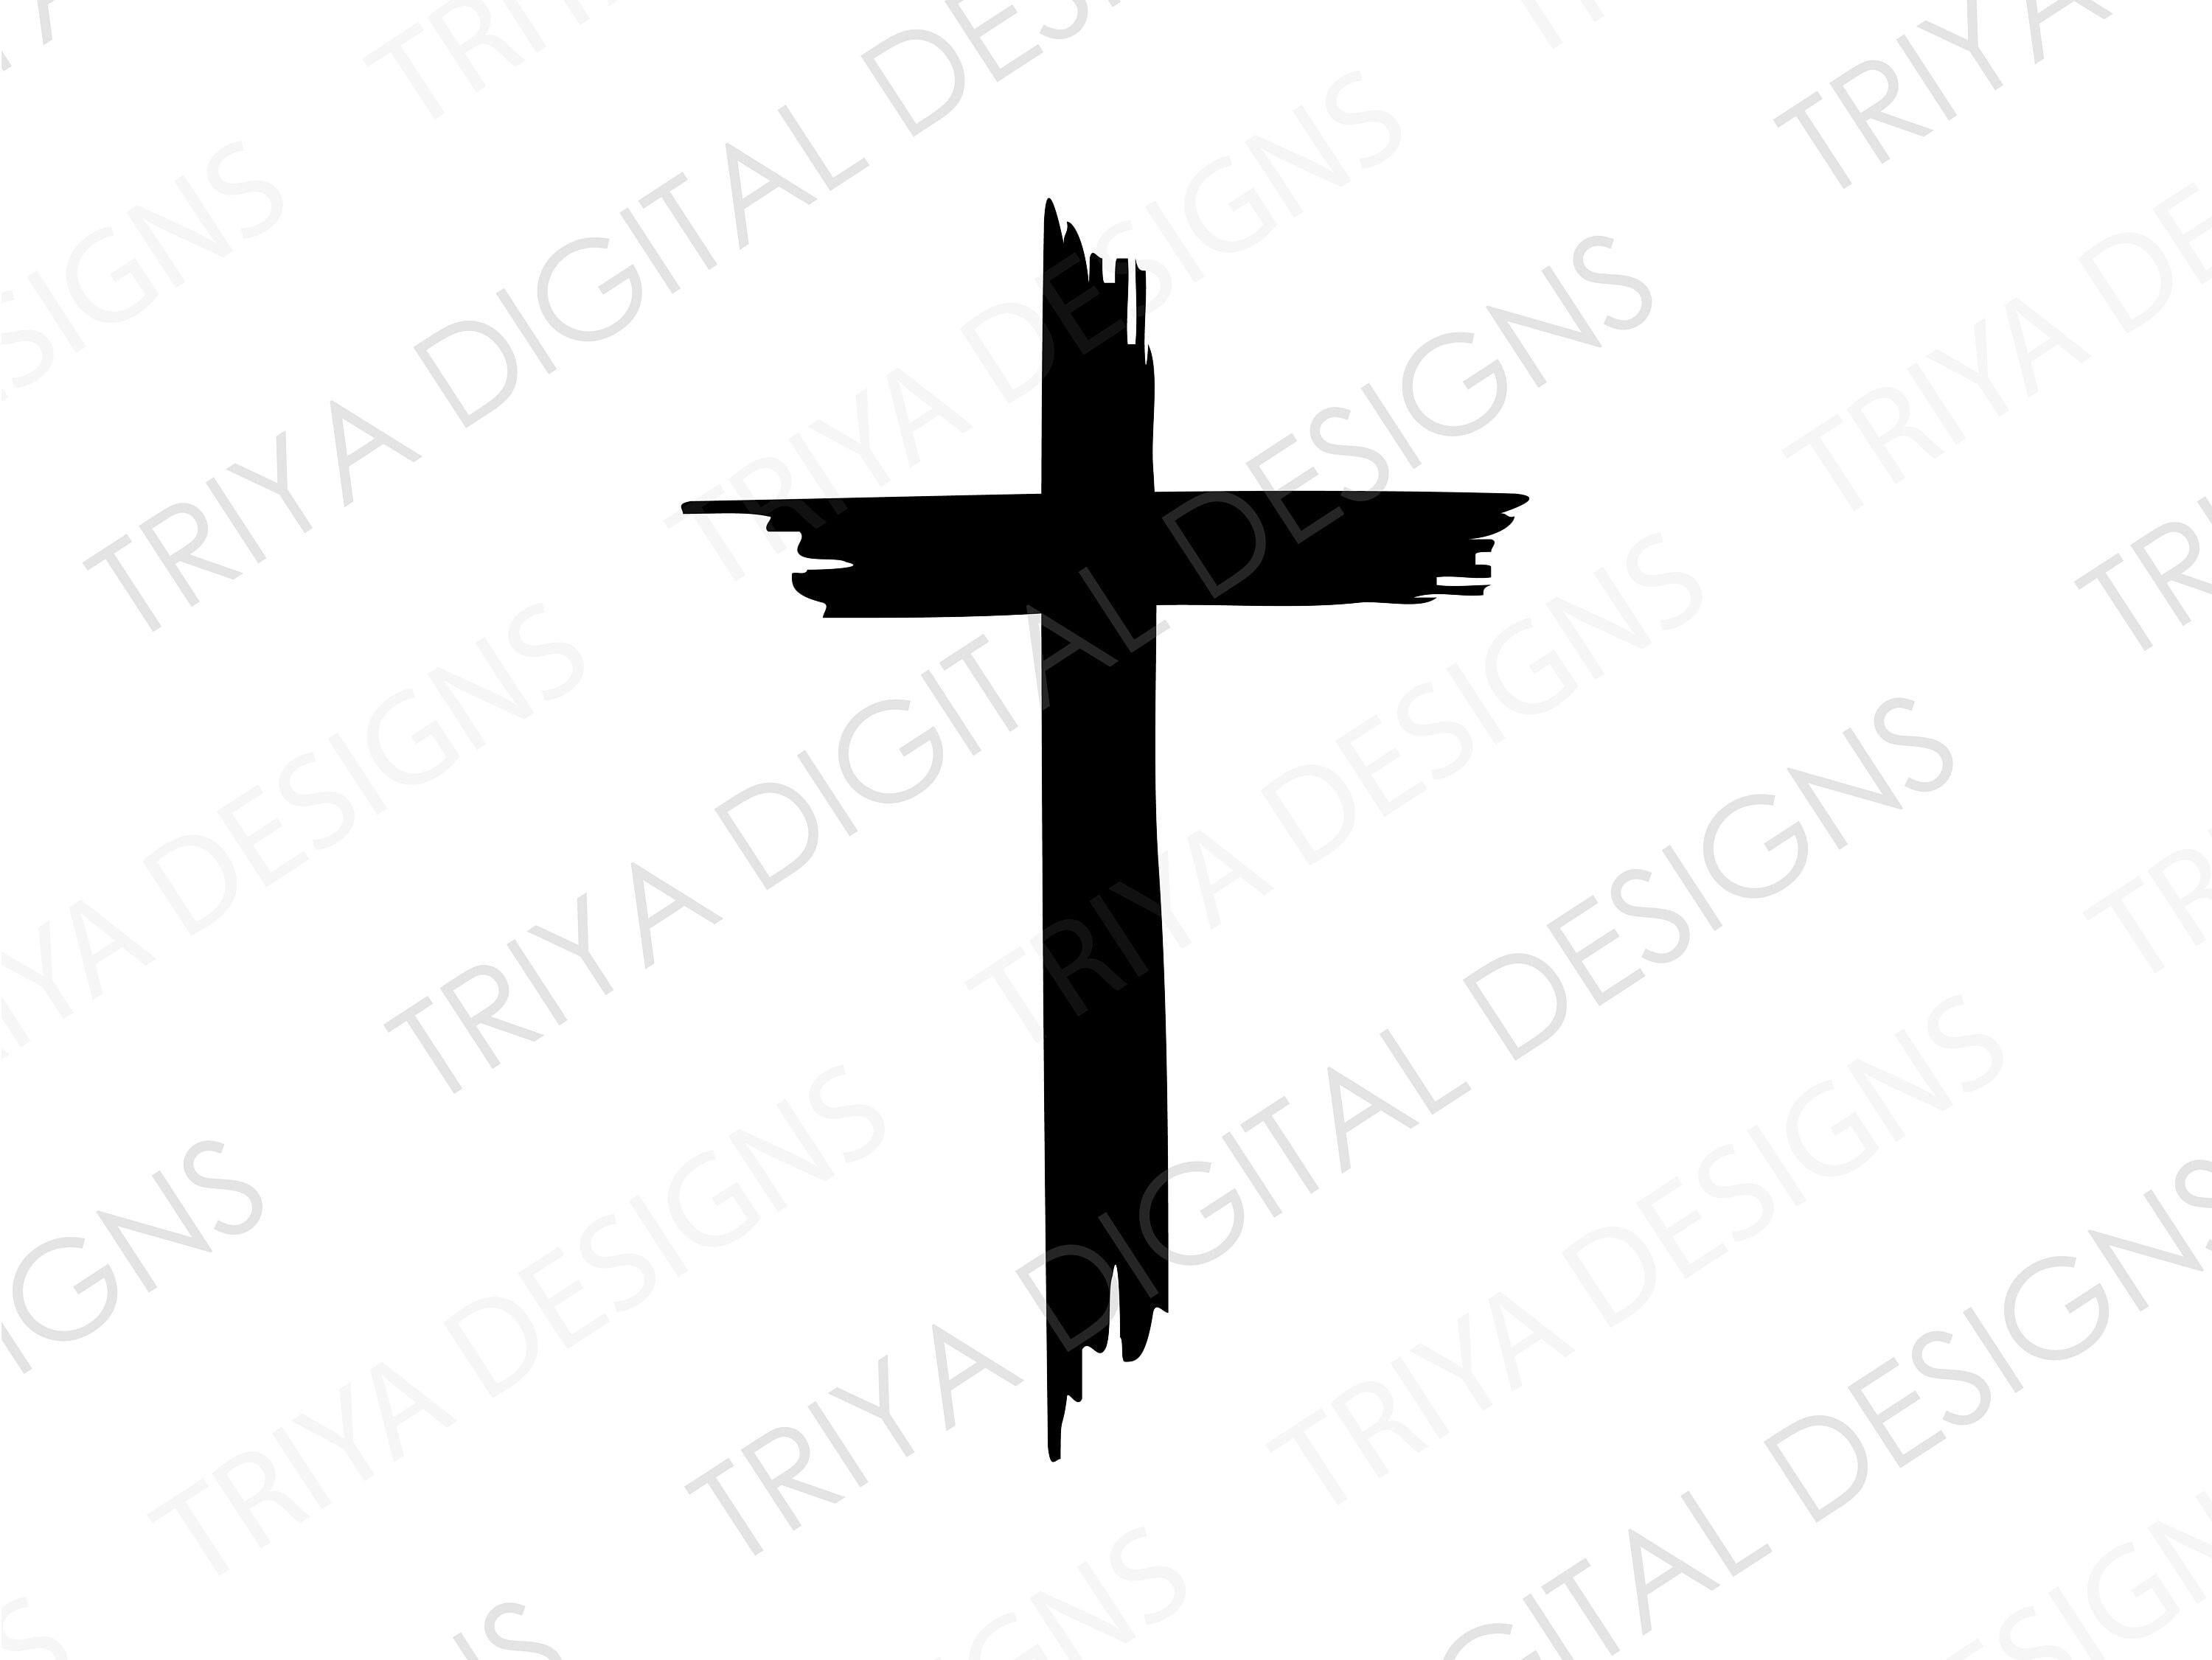 Grunge Cross SVG File, Distressed Cross Instant Download PremiumSVG ...